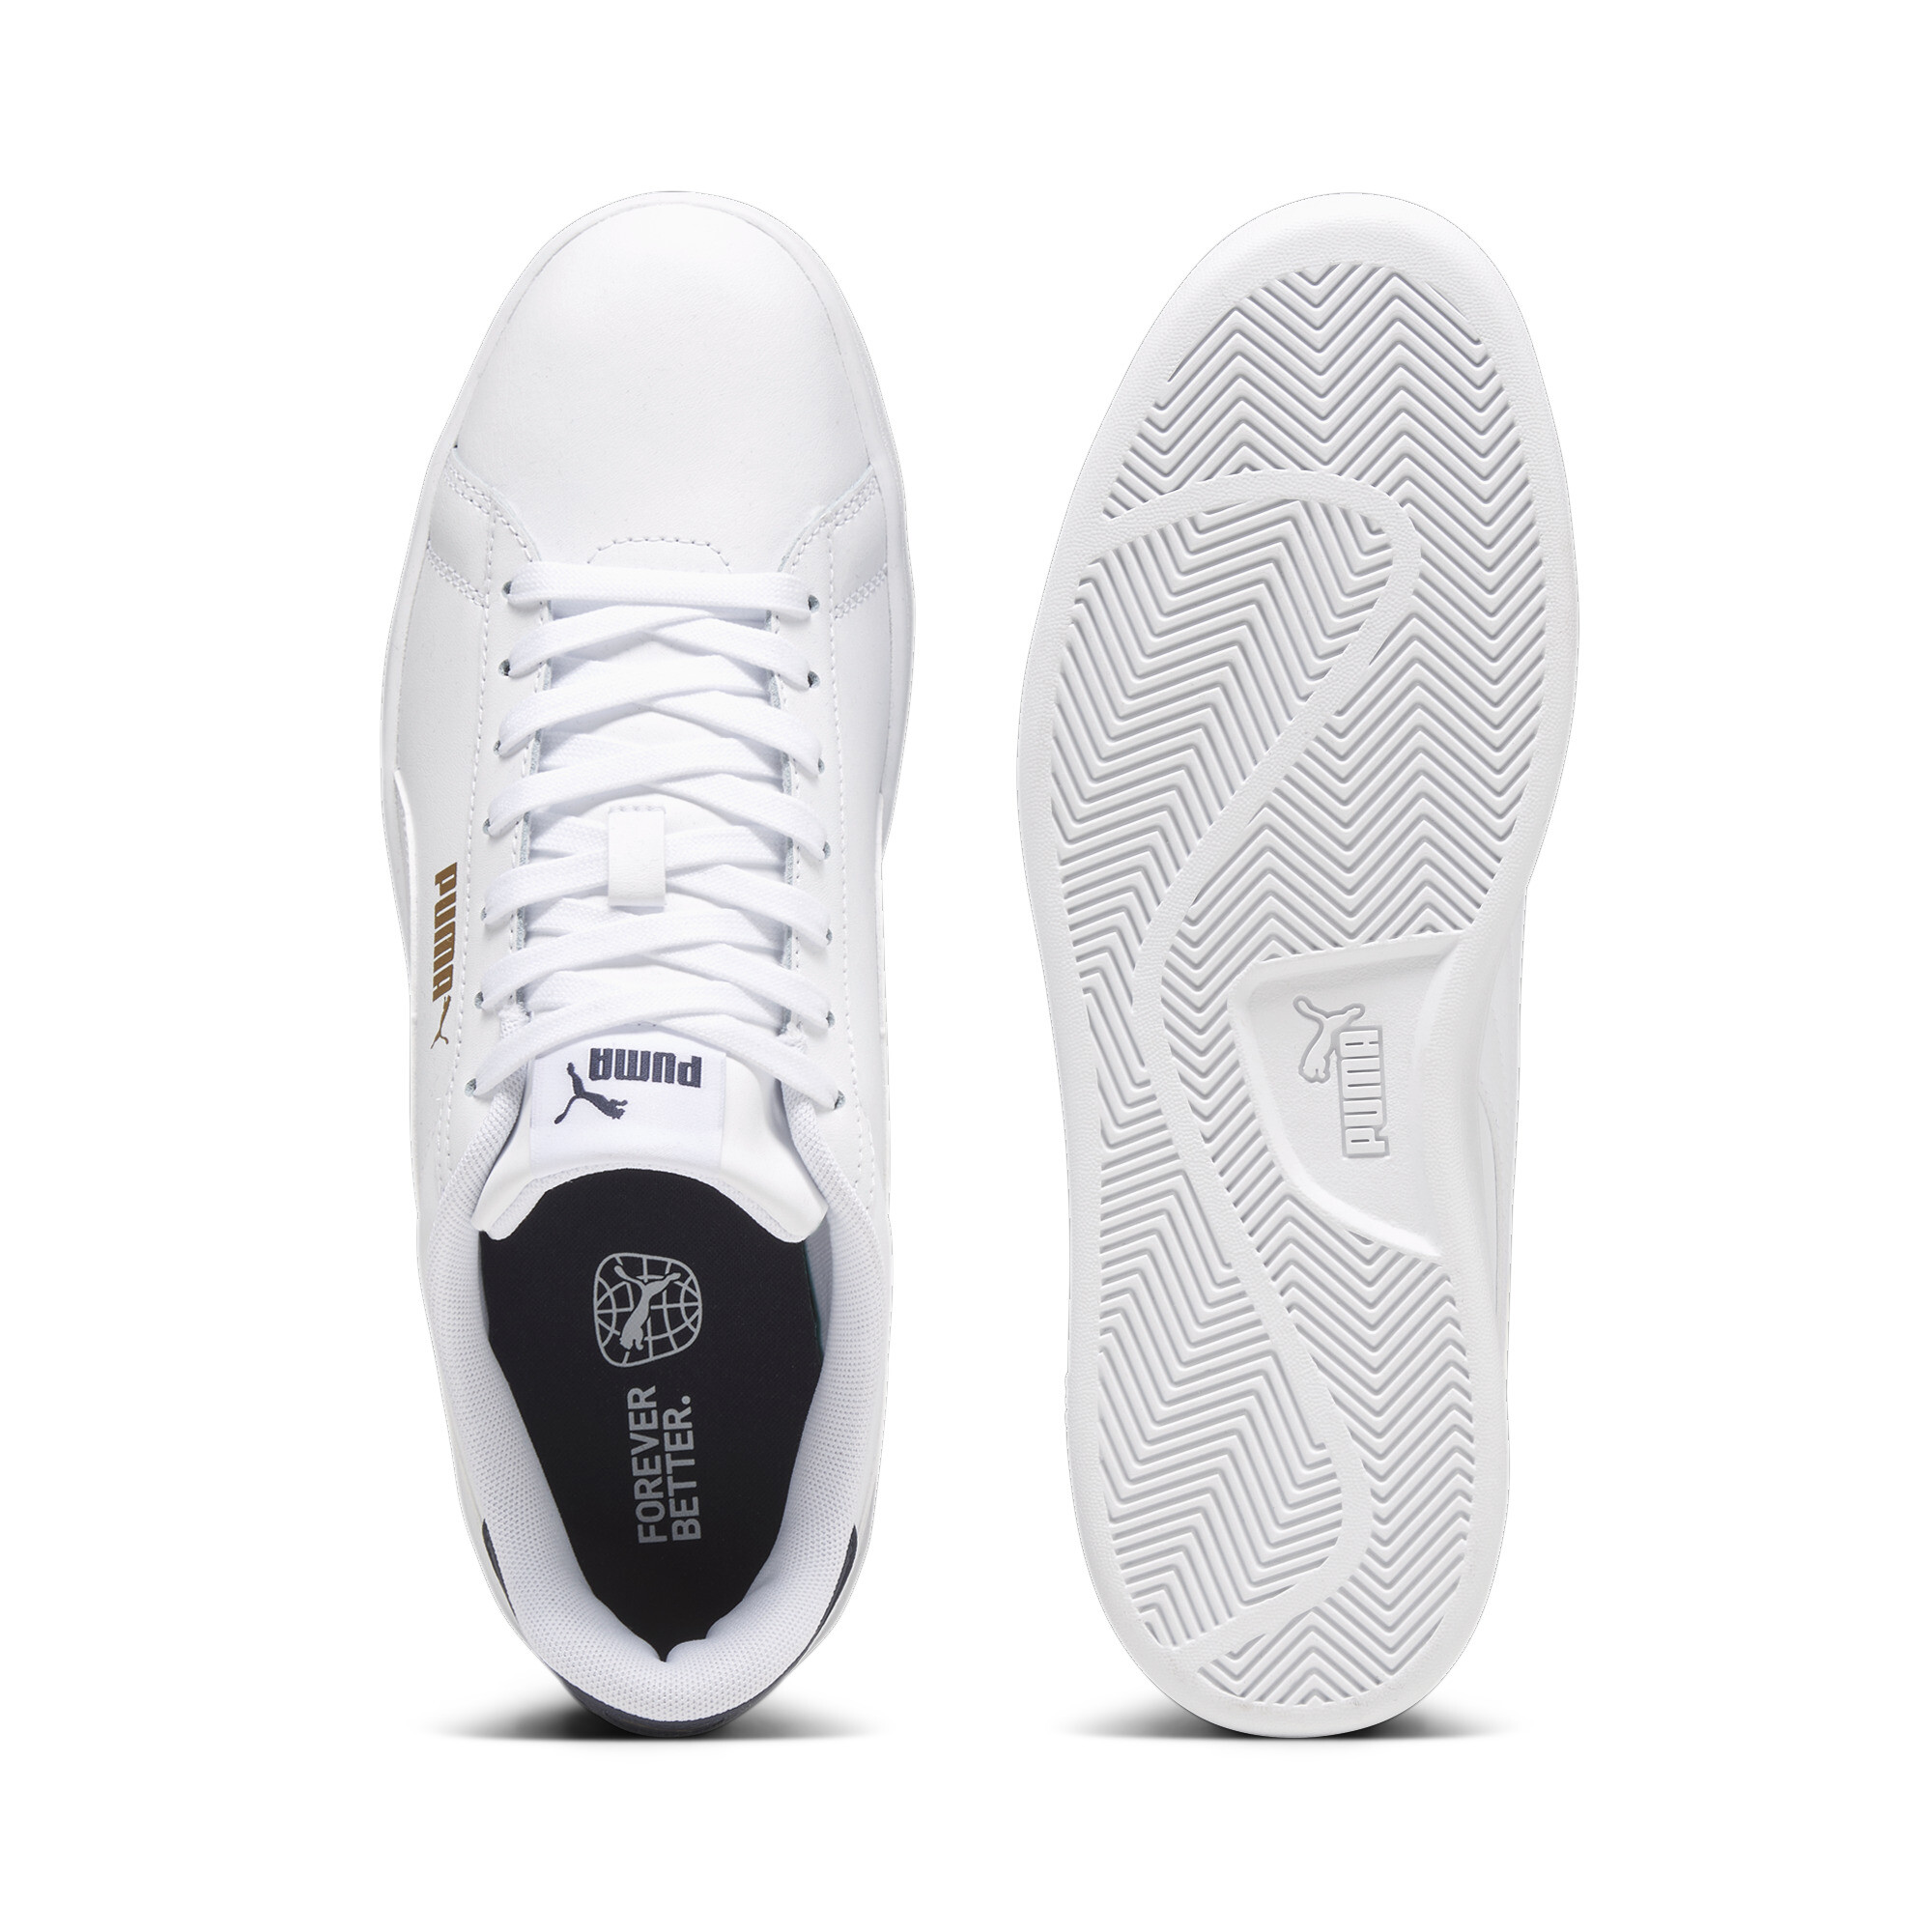 Puma Smash 3.0 L Sneakers, White, Size 38.5, Shoes